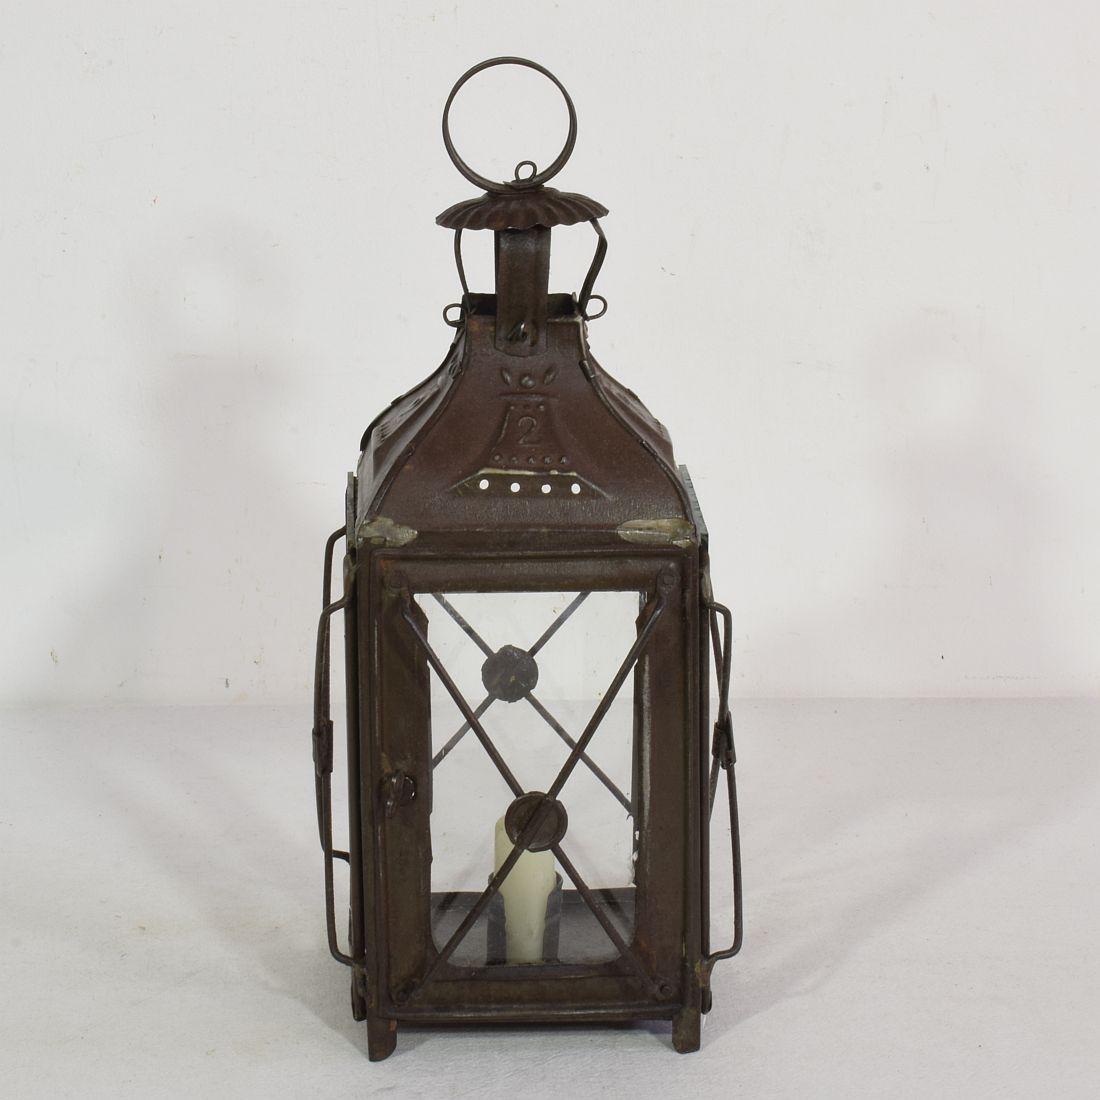 19th century lanterns